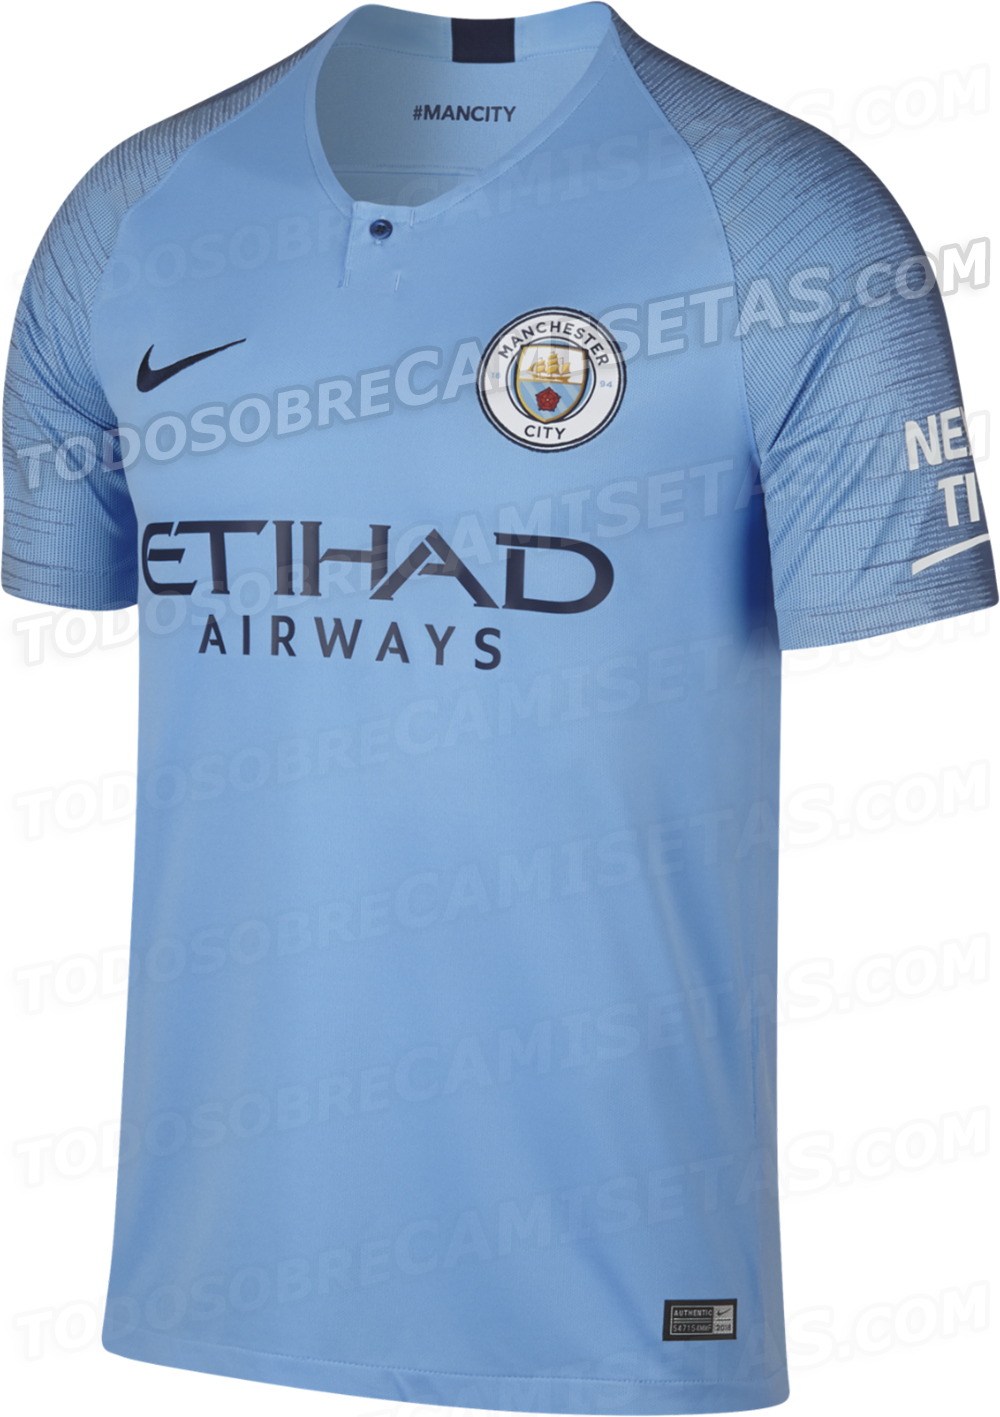 Manchester City 2018-19 Home Kit LEAKED